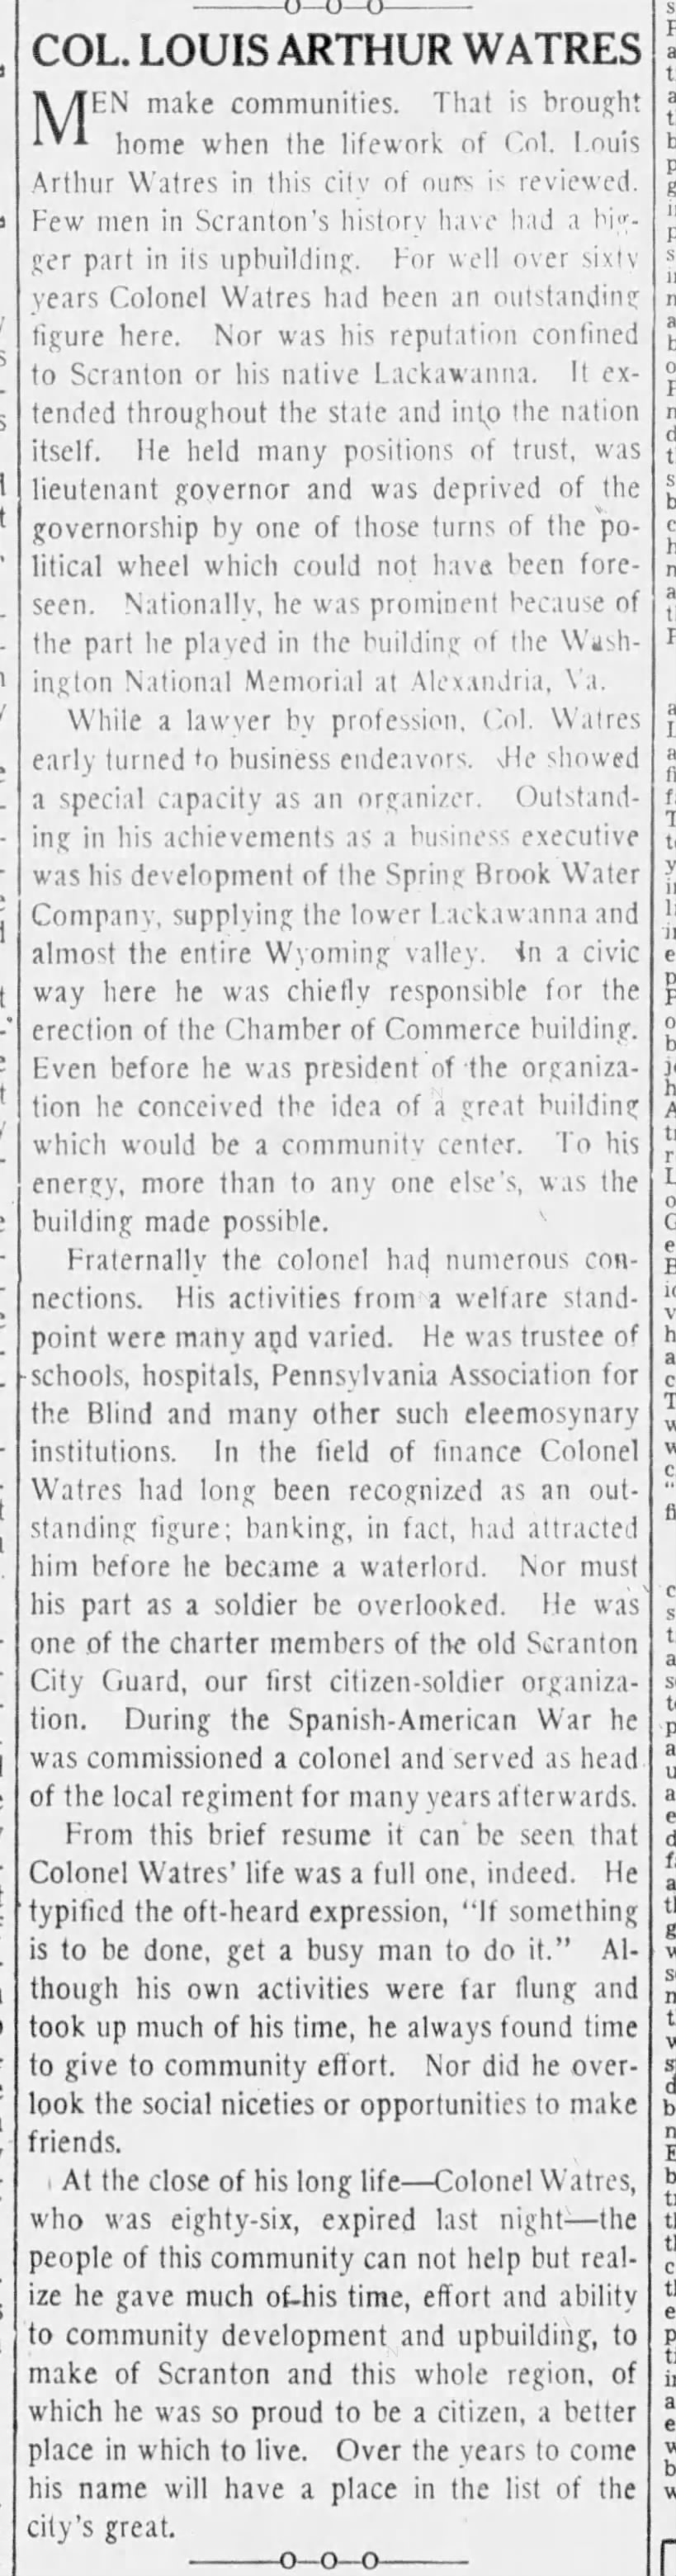 Col Louis Arthur Watres Memorial Editorial Times Tribune Jun 29 1937 pg 6